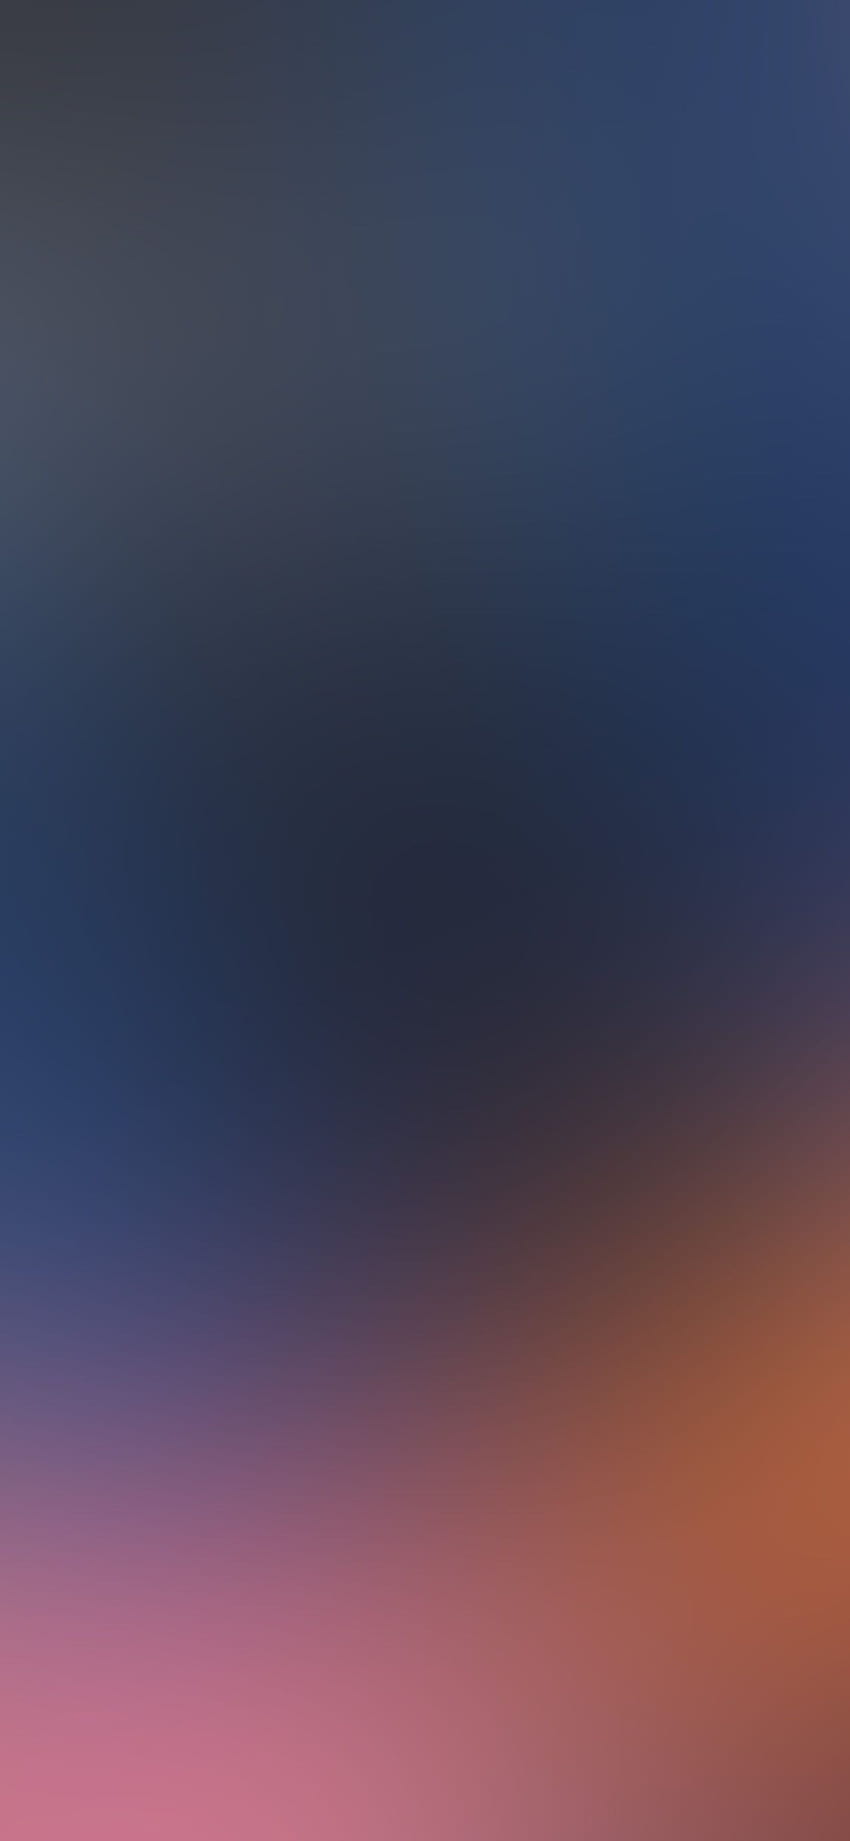 Iphone Blur, abstract blurry phone HD phone wallpaper